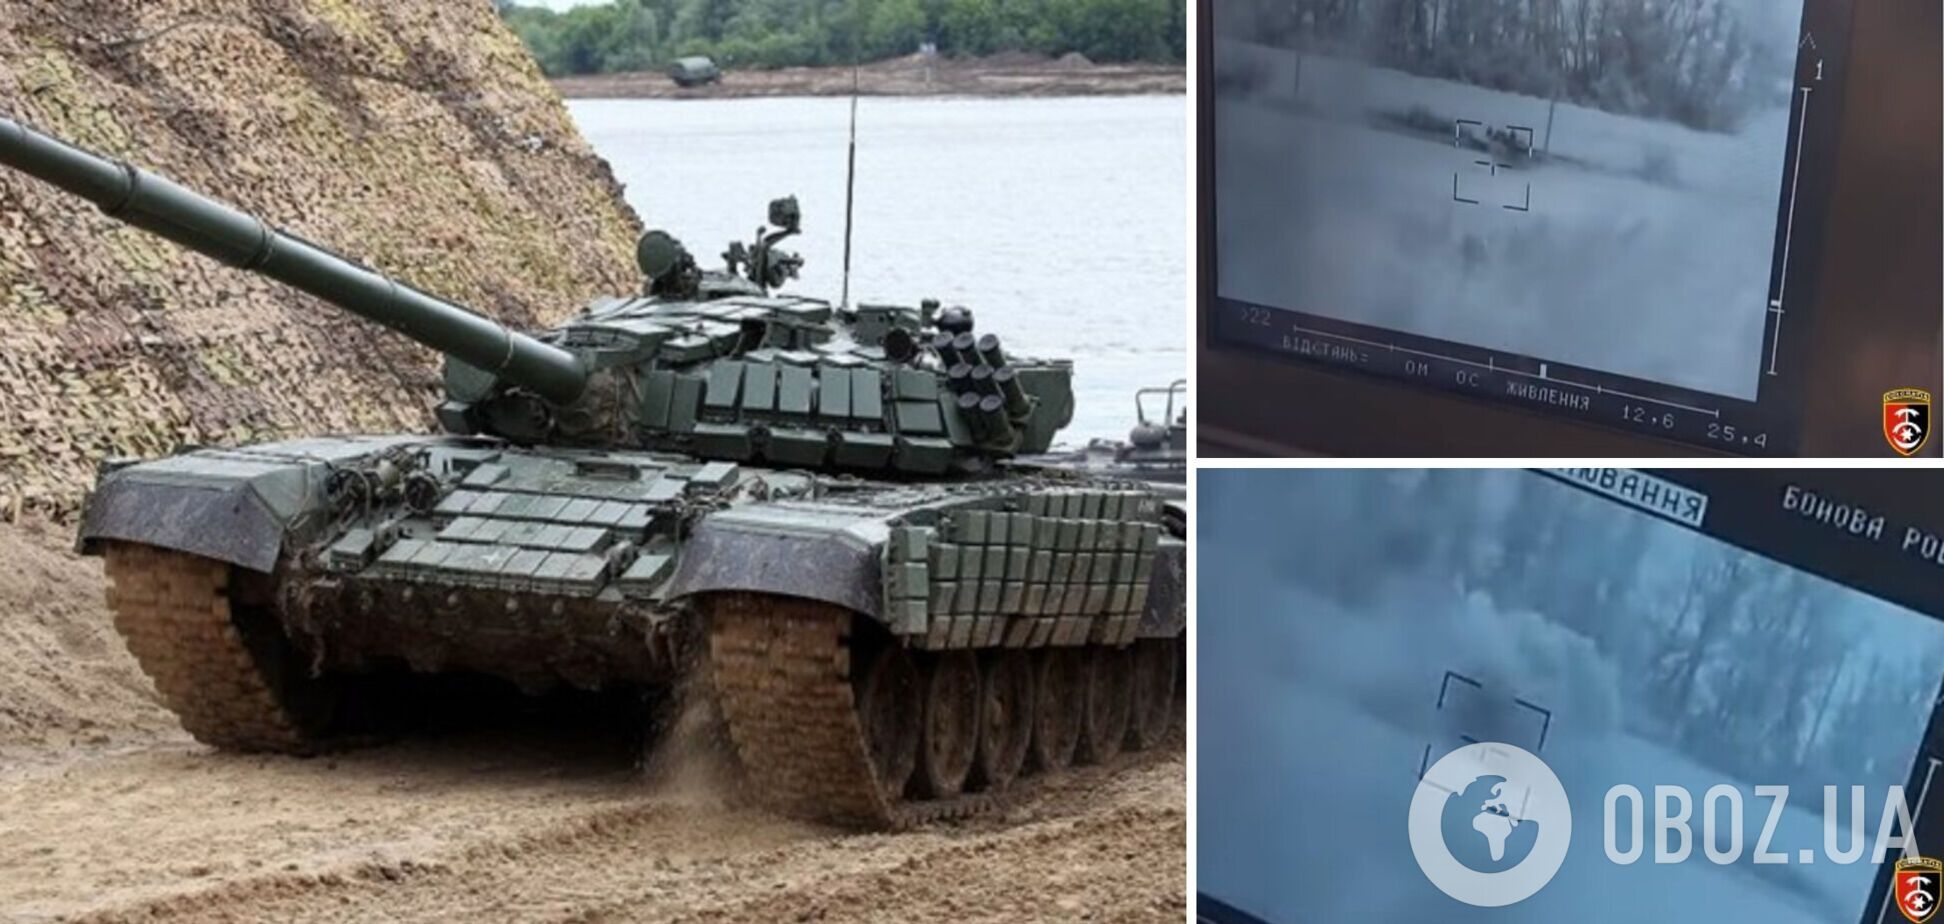 Оператори української 'Стугни' знищили два танки РФ